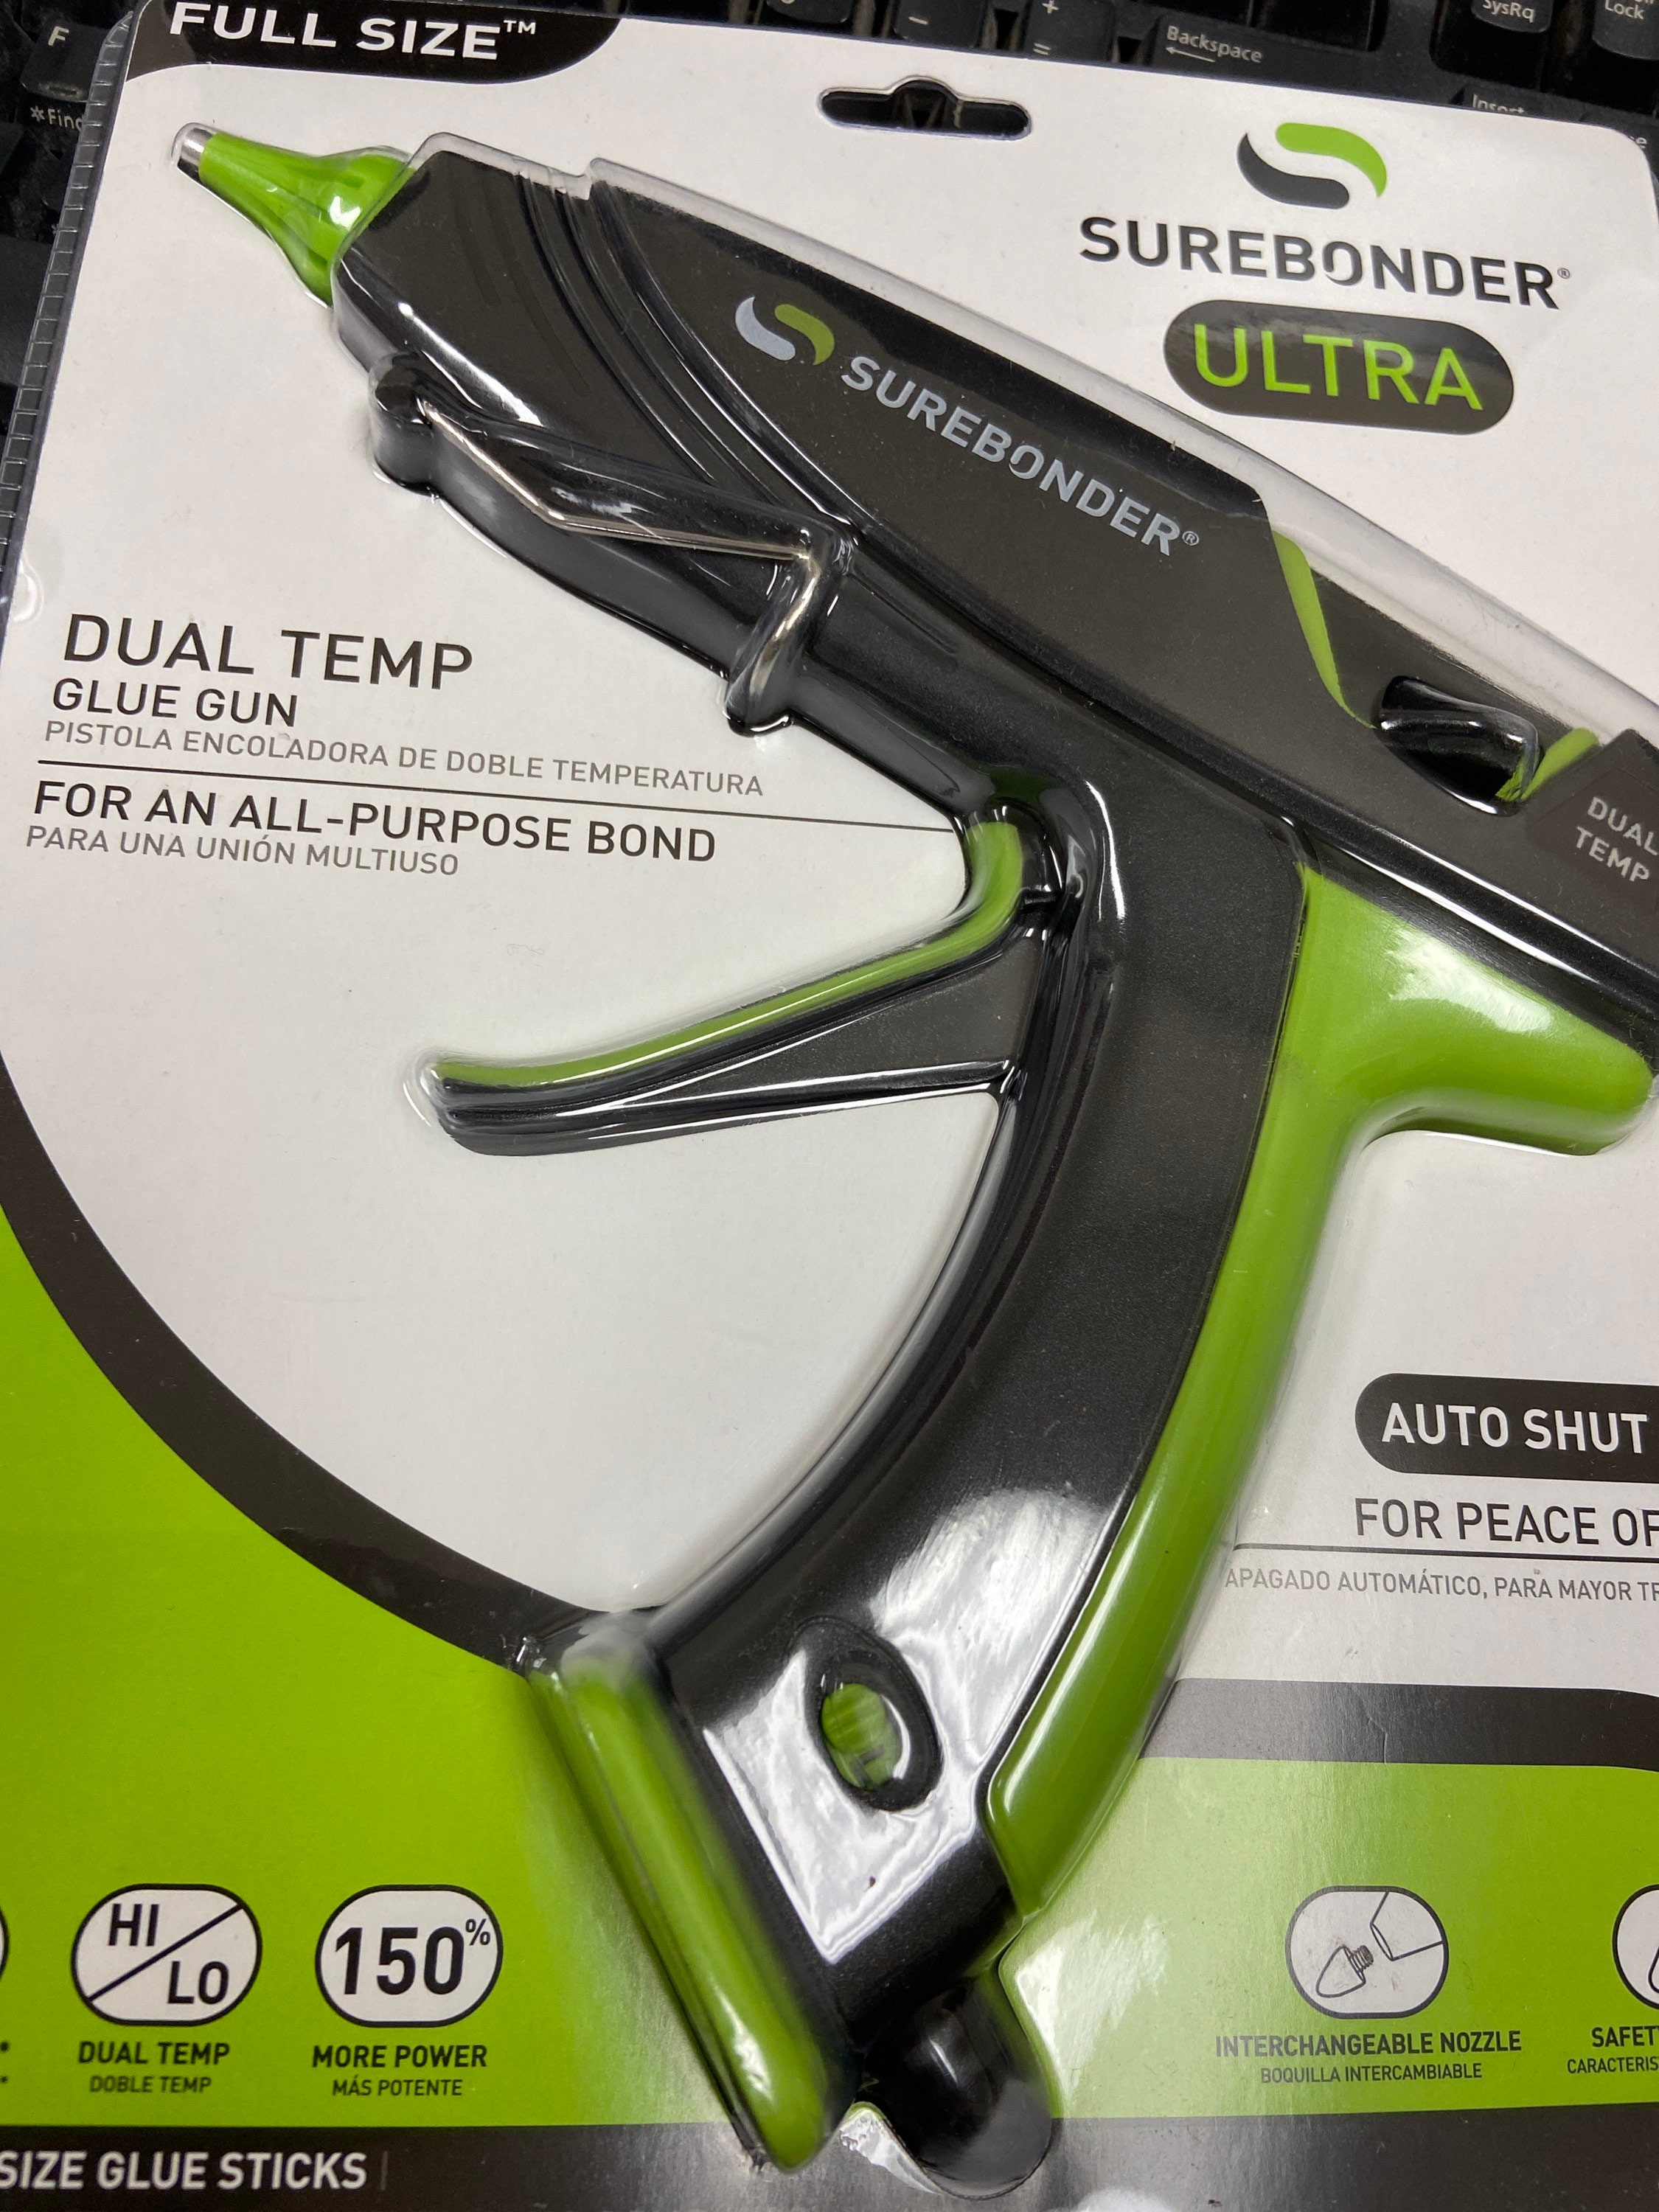 Ultra Series Auto-Shut-Off Hot Glue Gun, Surebonder Full Size 100W Dual Temperature Glue Gun Kit with 20 Glue Sticks